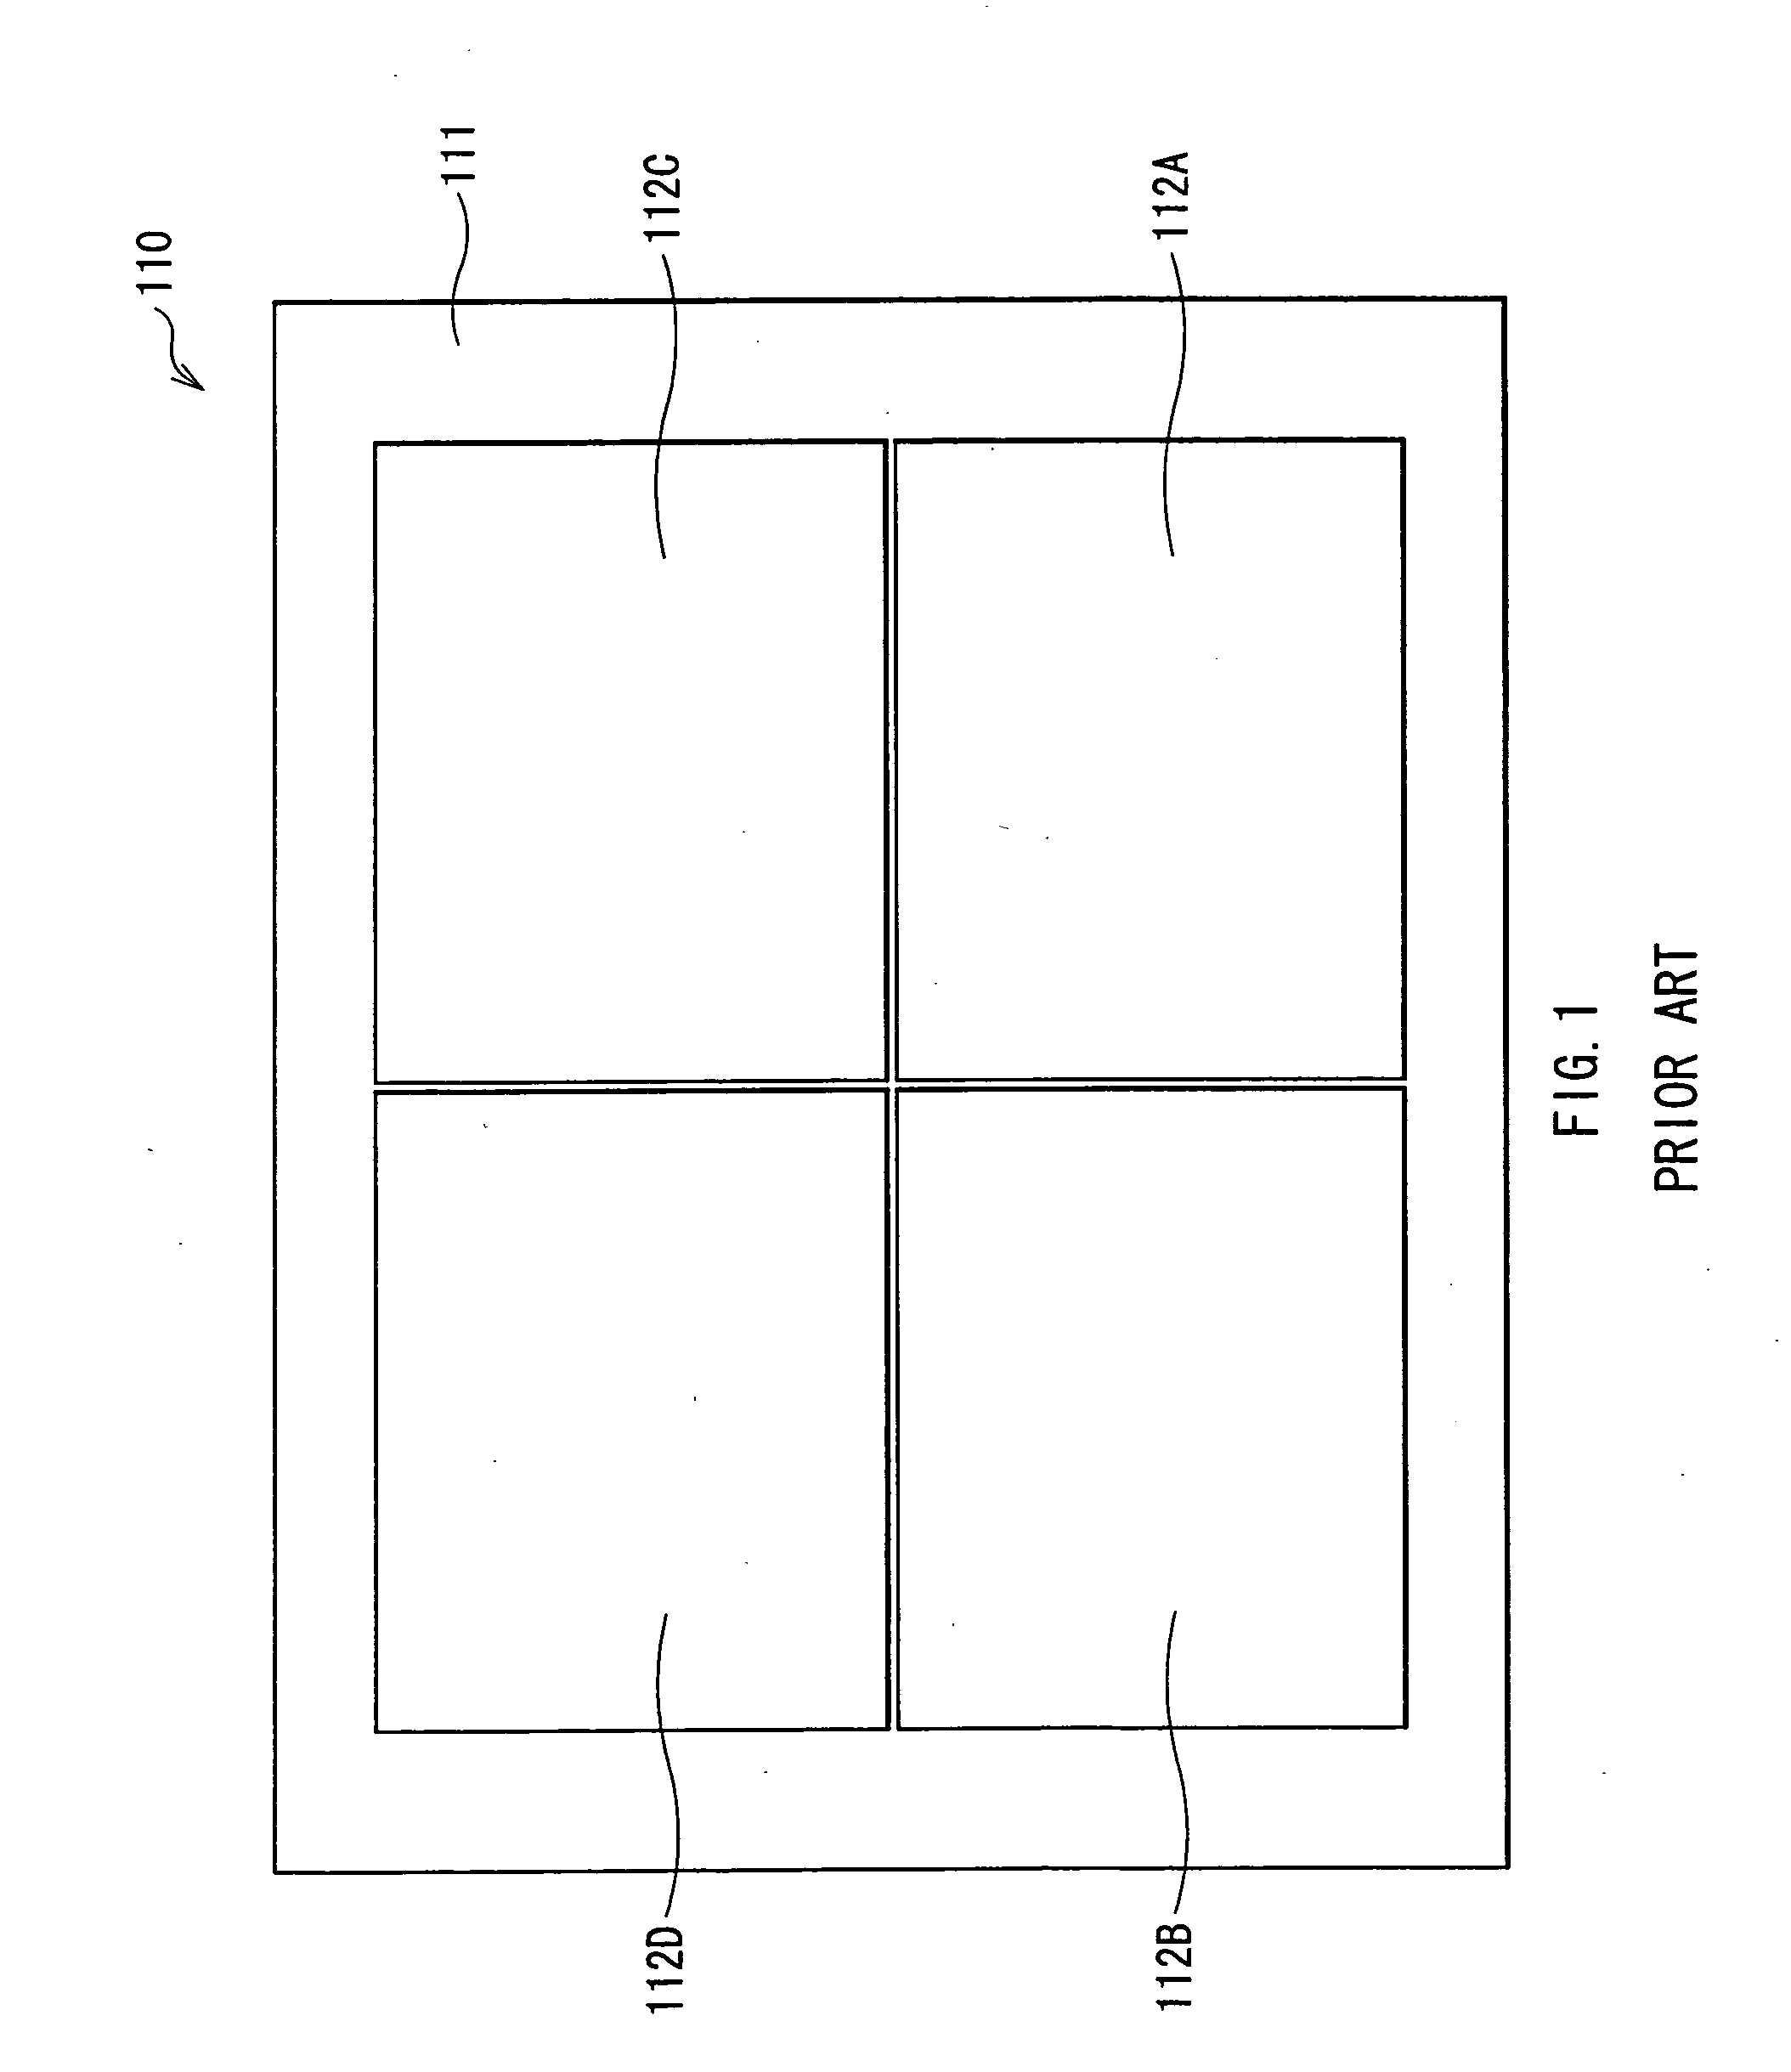 Method of manufacturing display unit